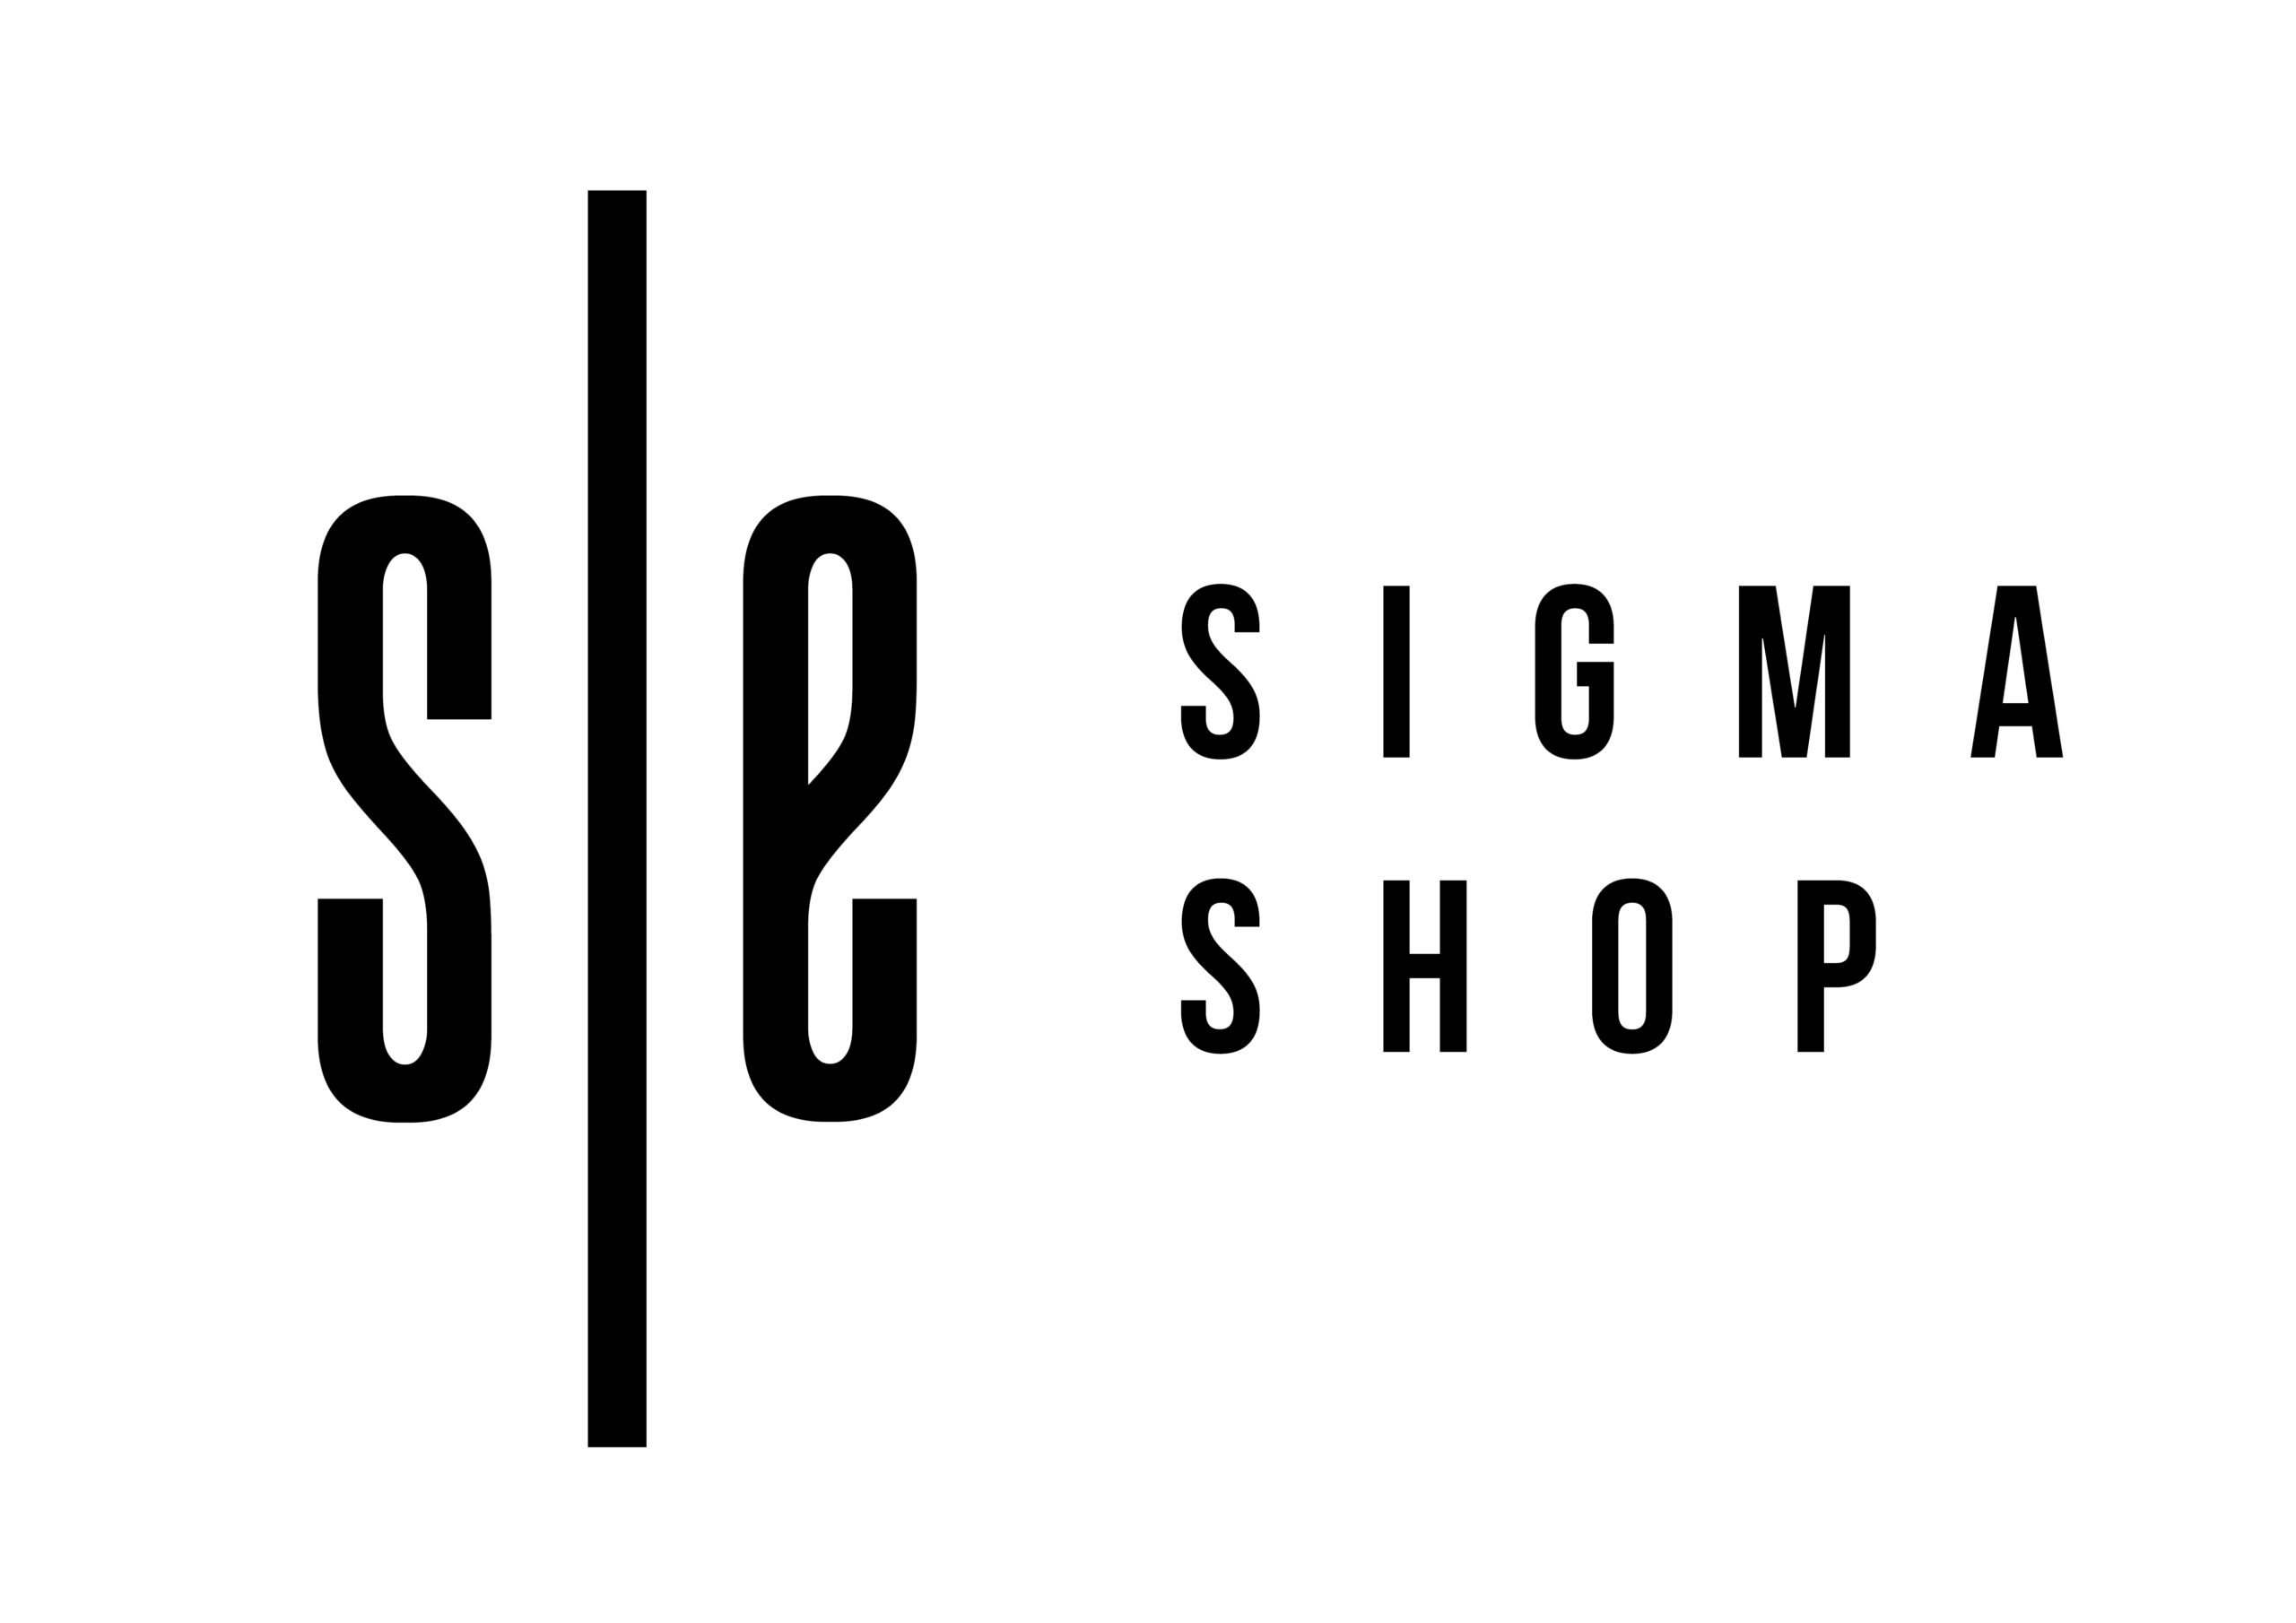 Sigma E-shop